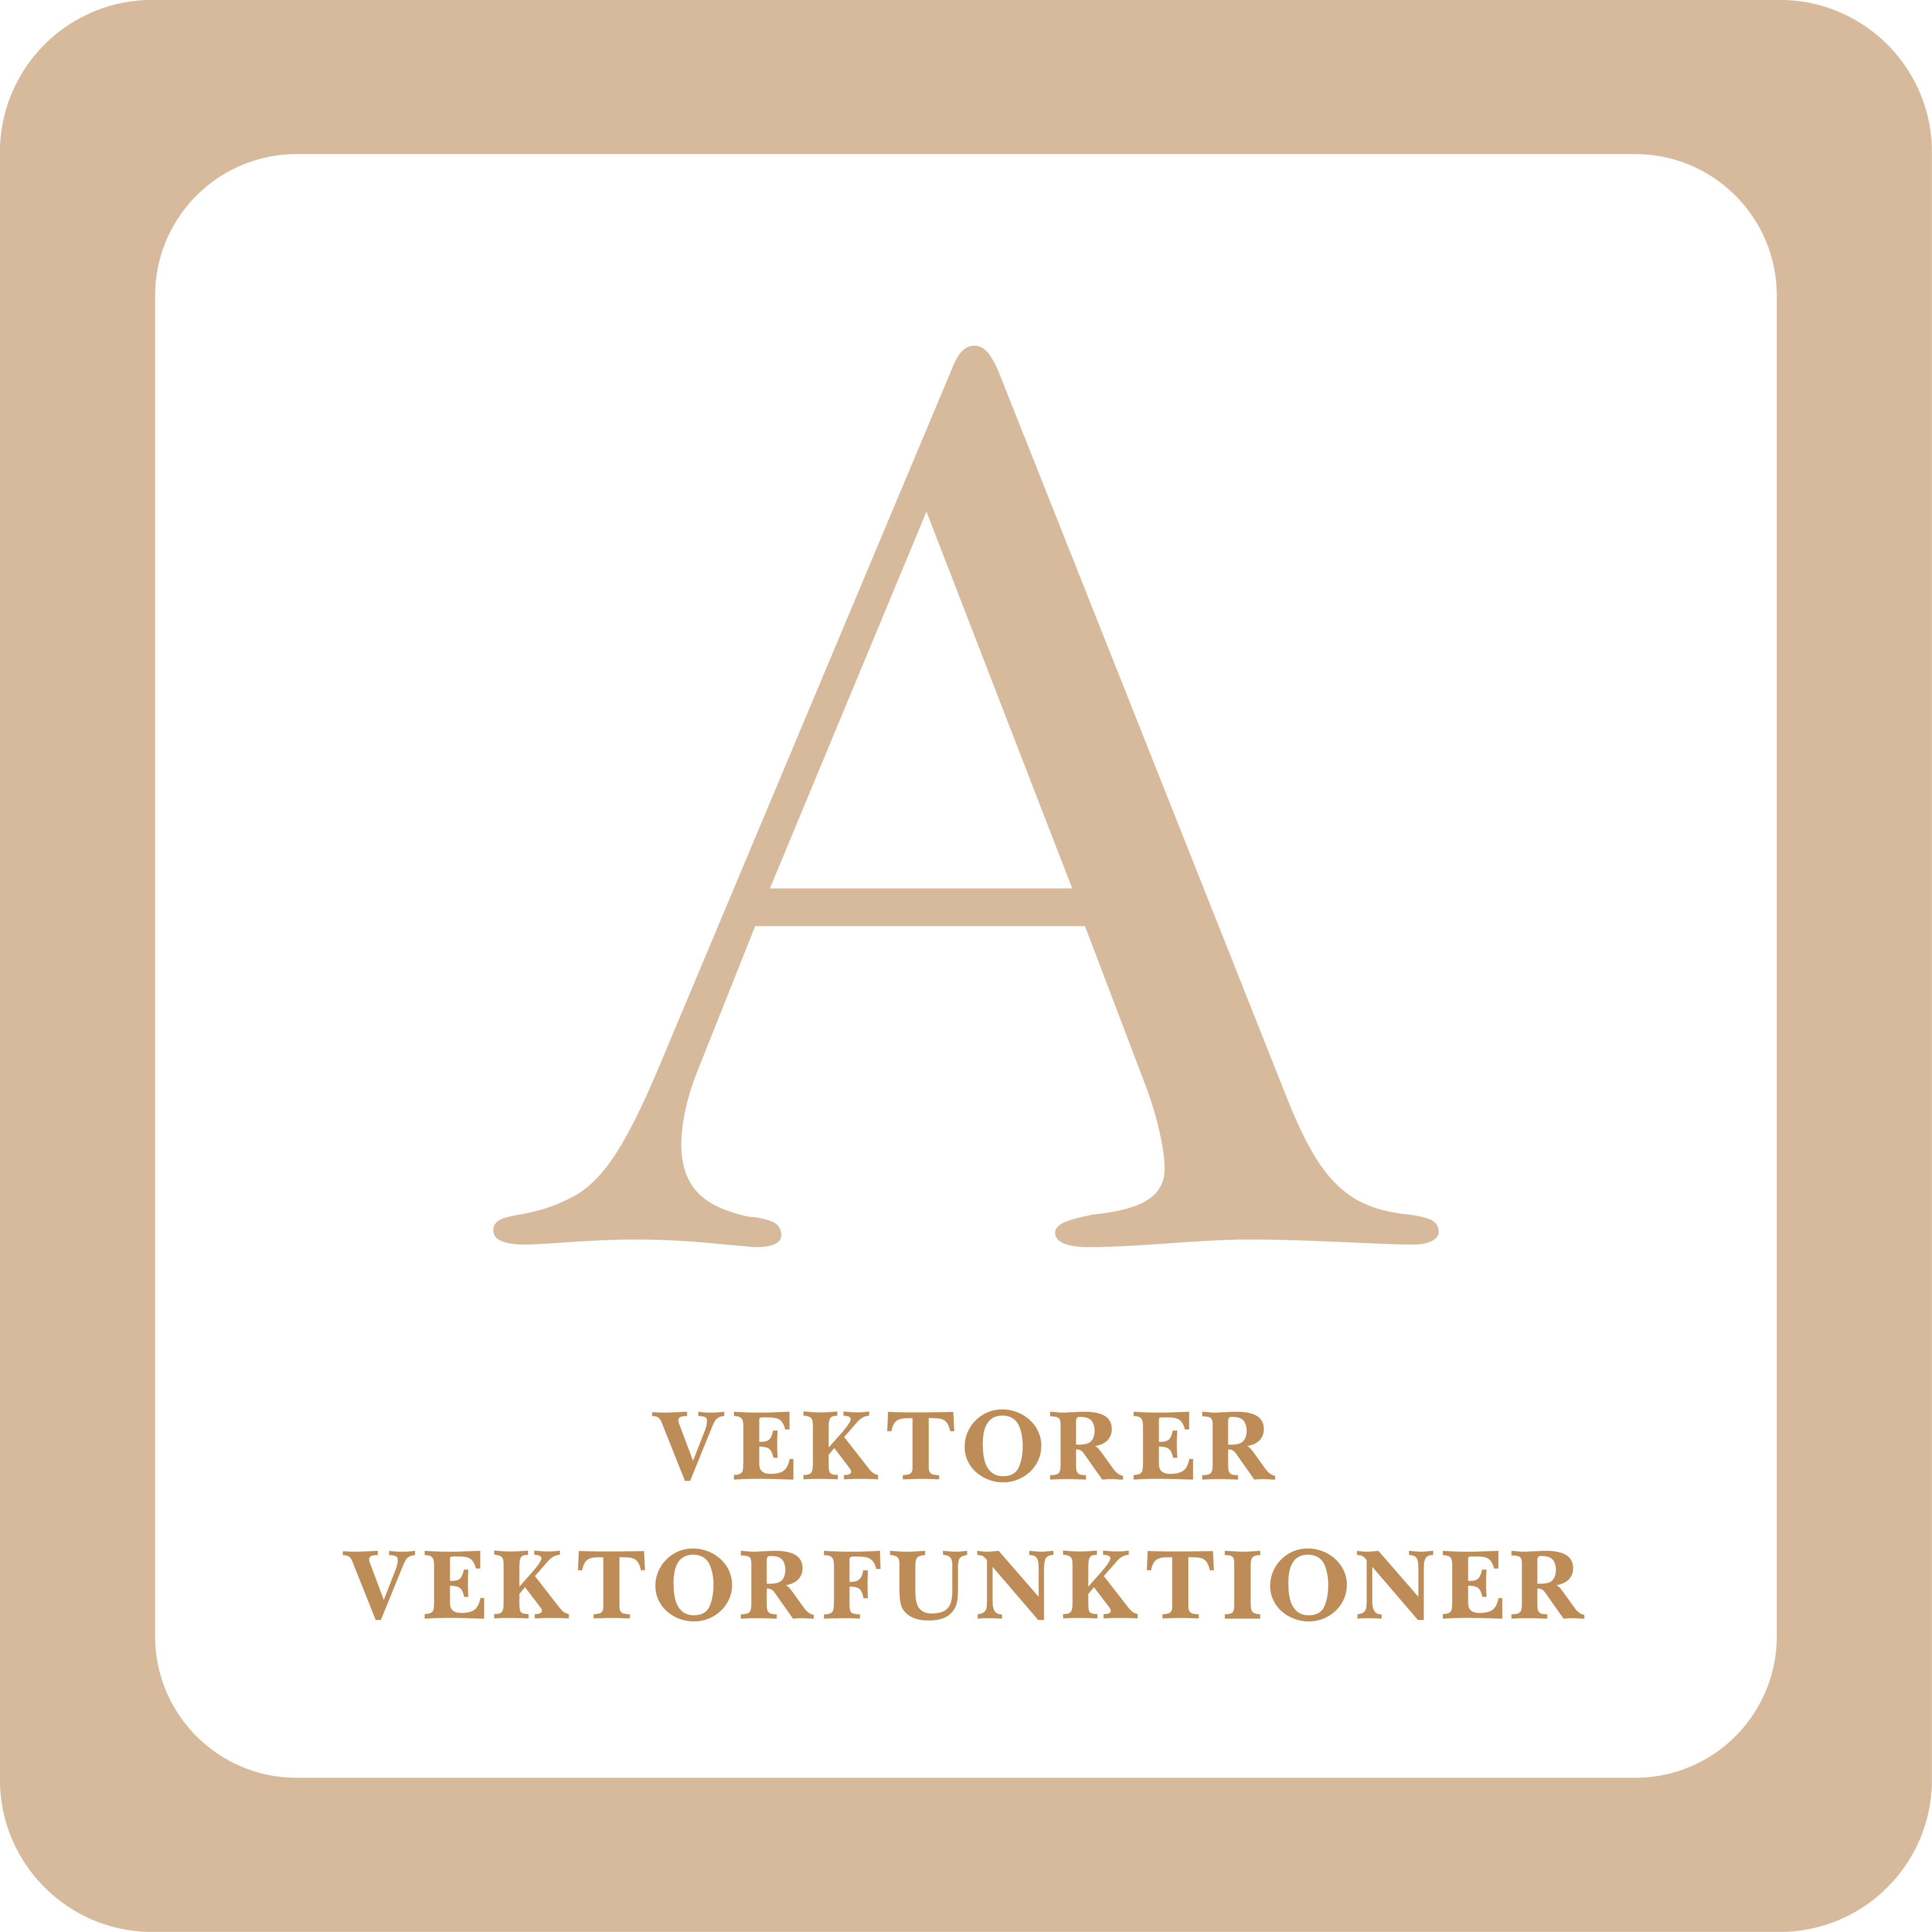 Read more about the article Vektorer Vektorfunktioner